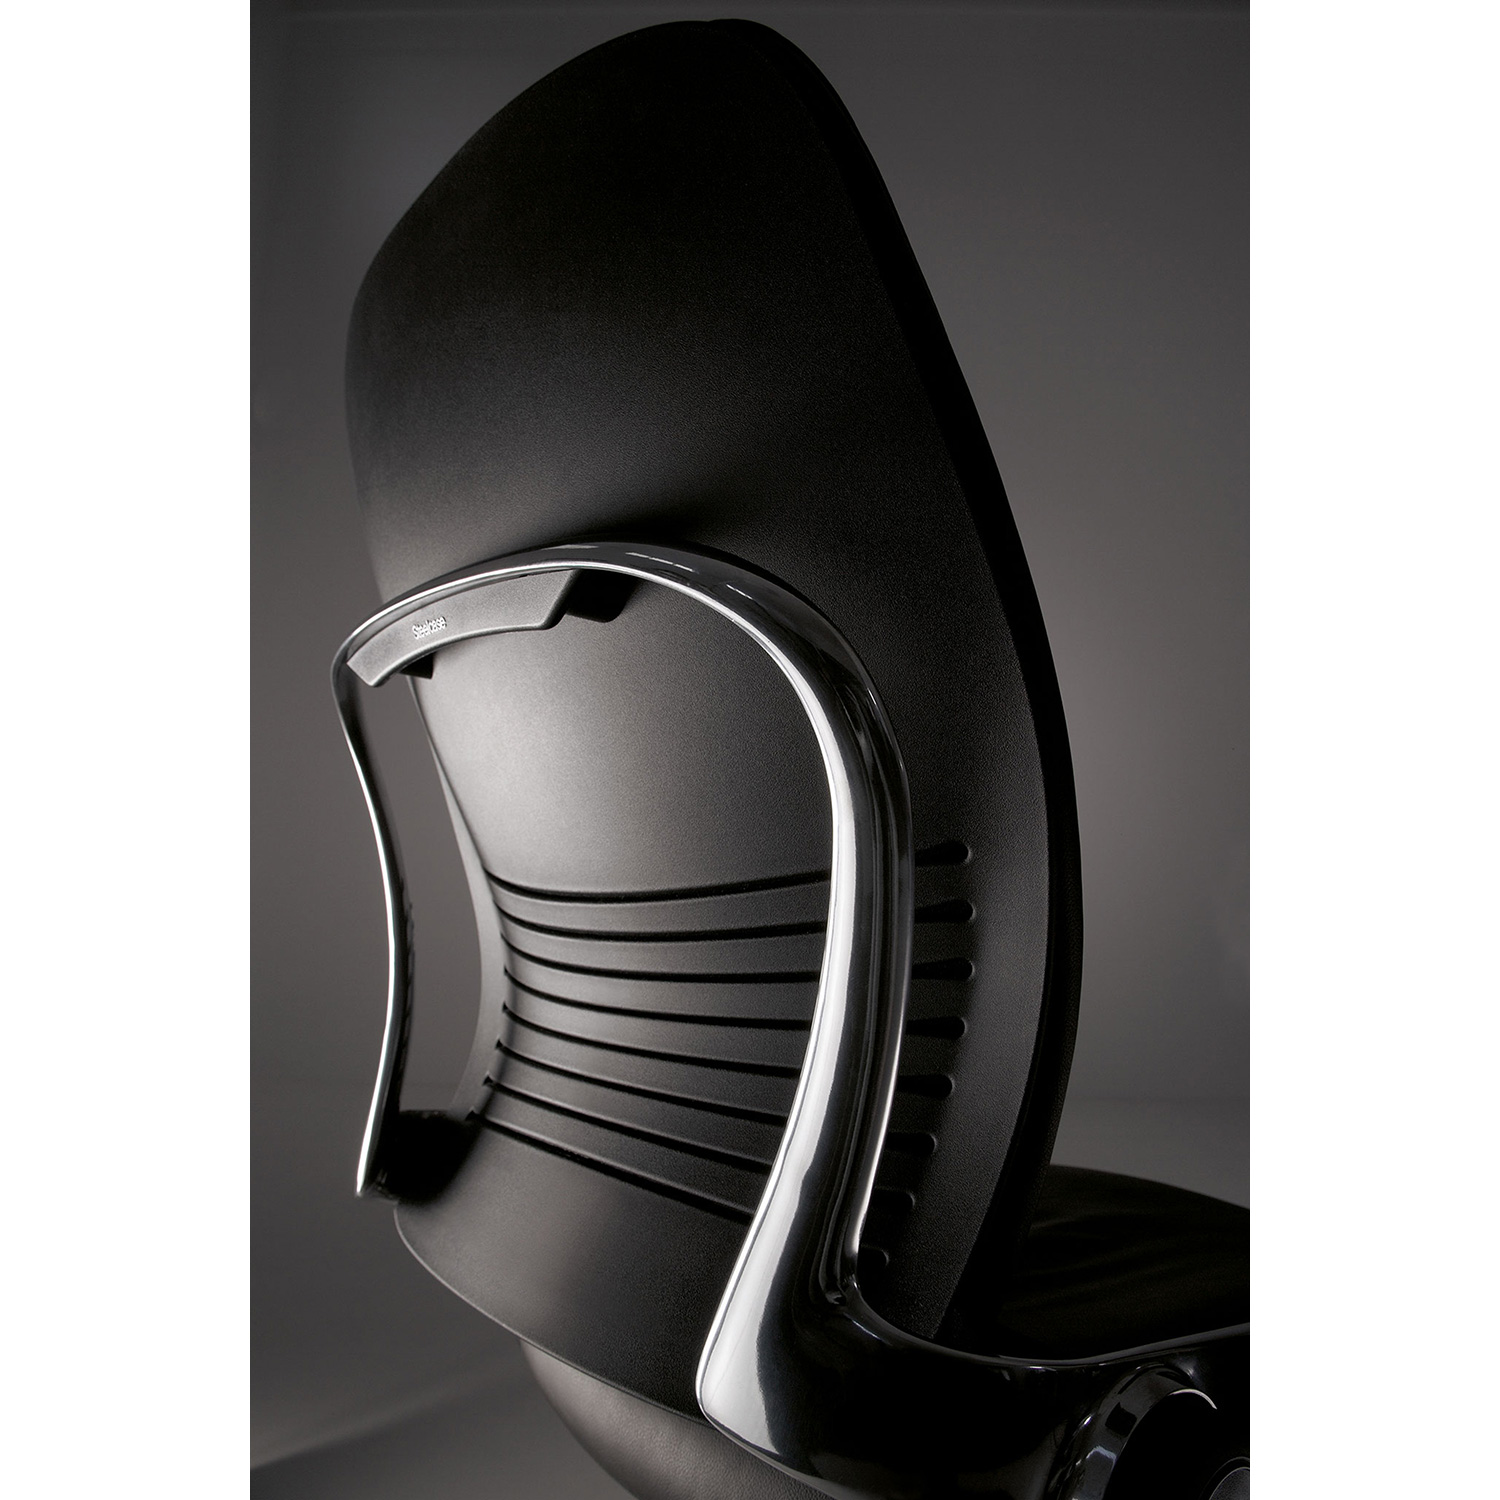 Steelcase Leap V2 Bürostuhl Executive Premium mit Lederbezug und Kopfstütze